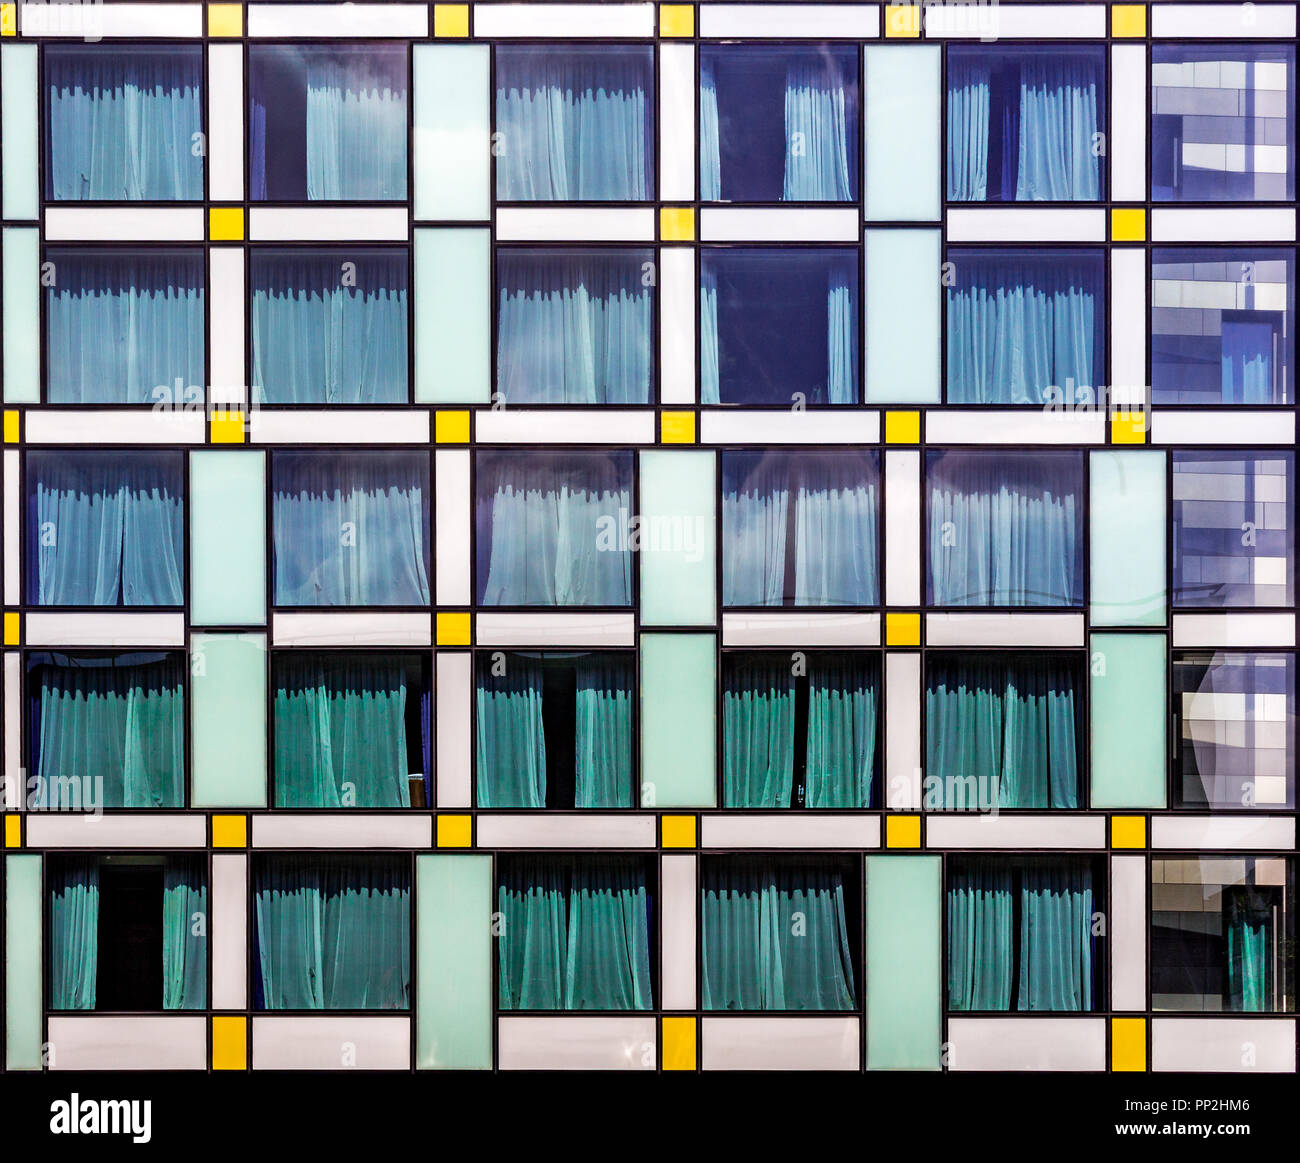 Hotel windows in Mondrian pattern, Manchester, UK Stock Photo